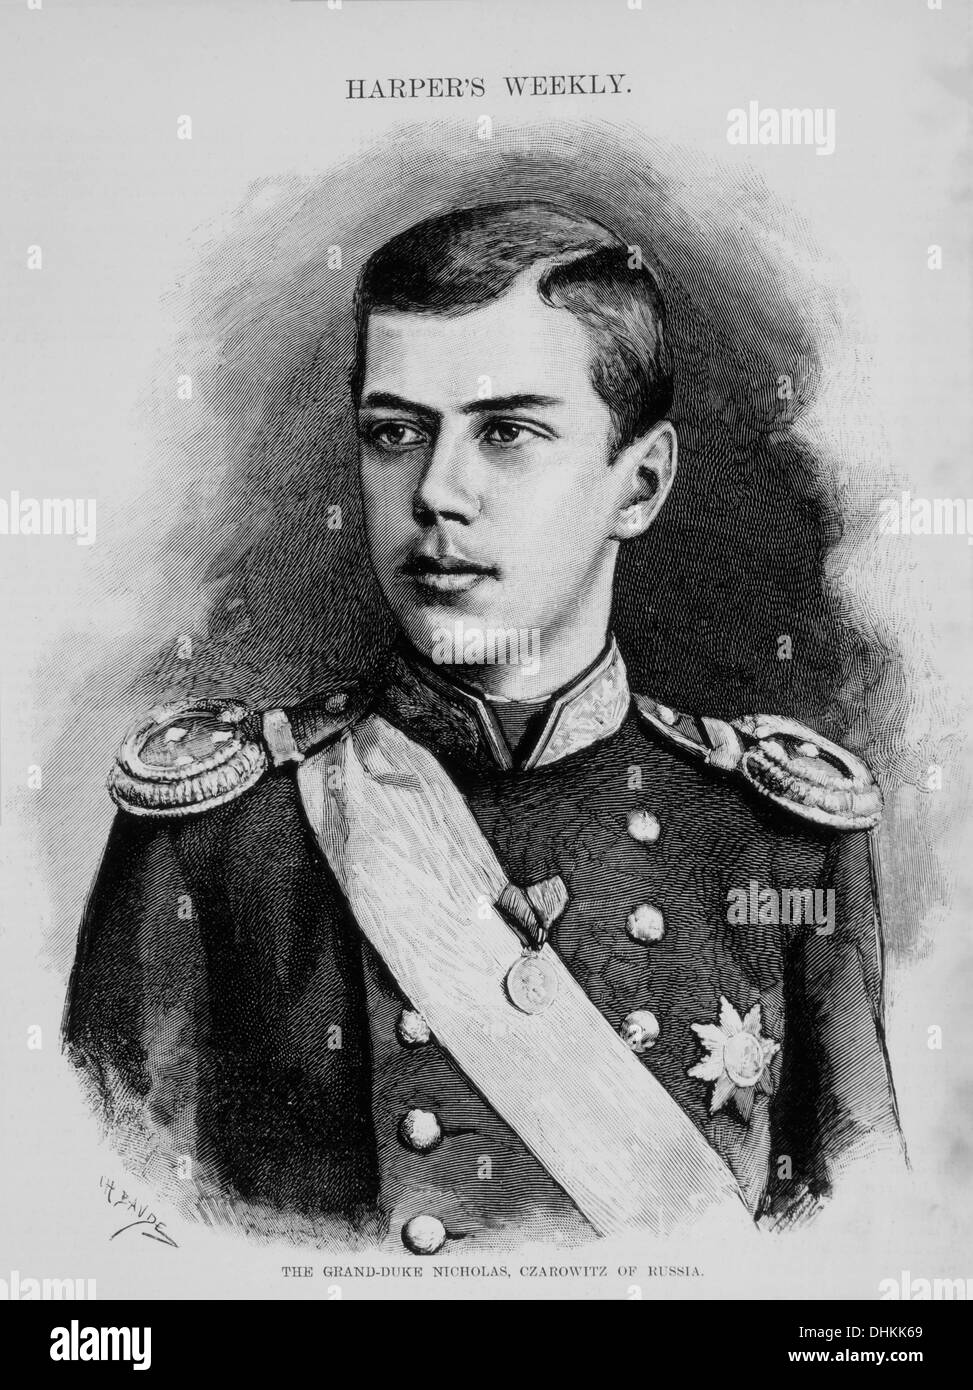 The Grand-Duke Nicholas, Czarowitz of Russia, Portrait, Harper's Weekly, Illustration, 1889 Stock Photo